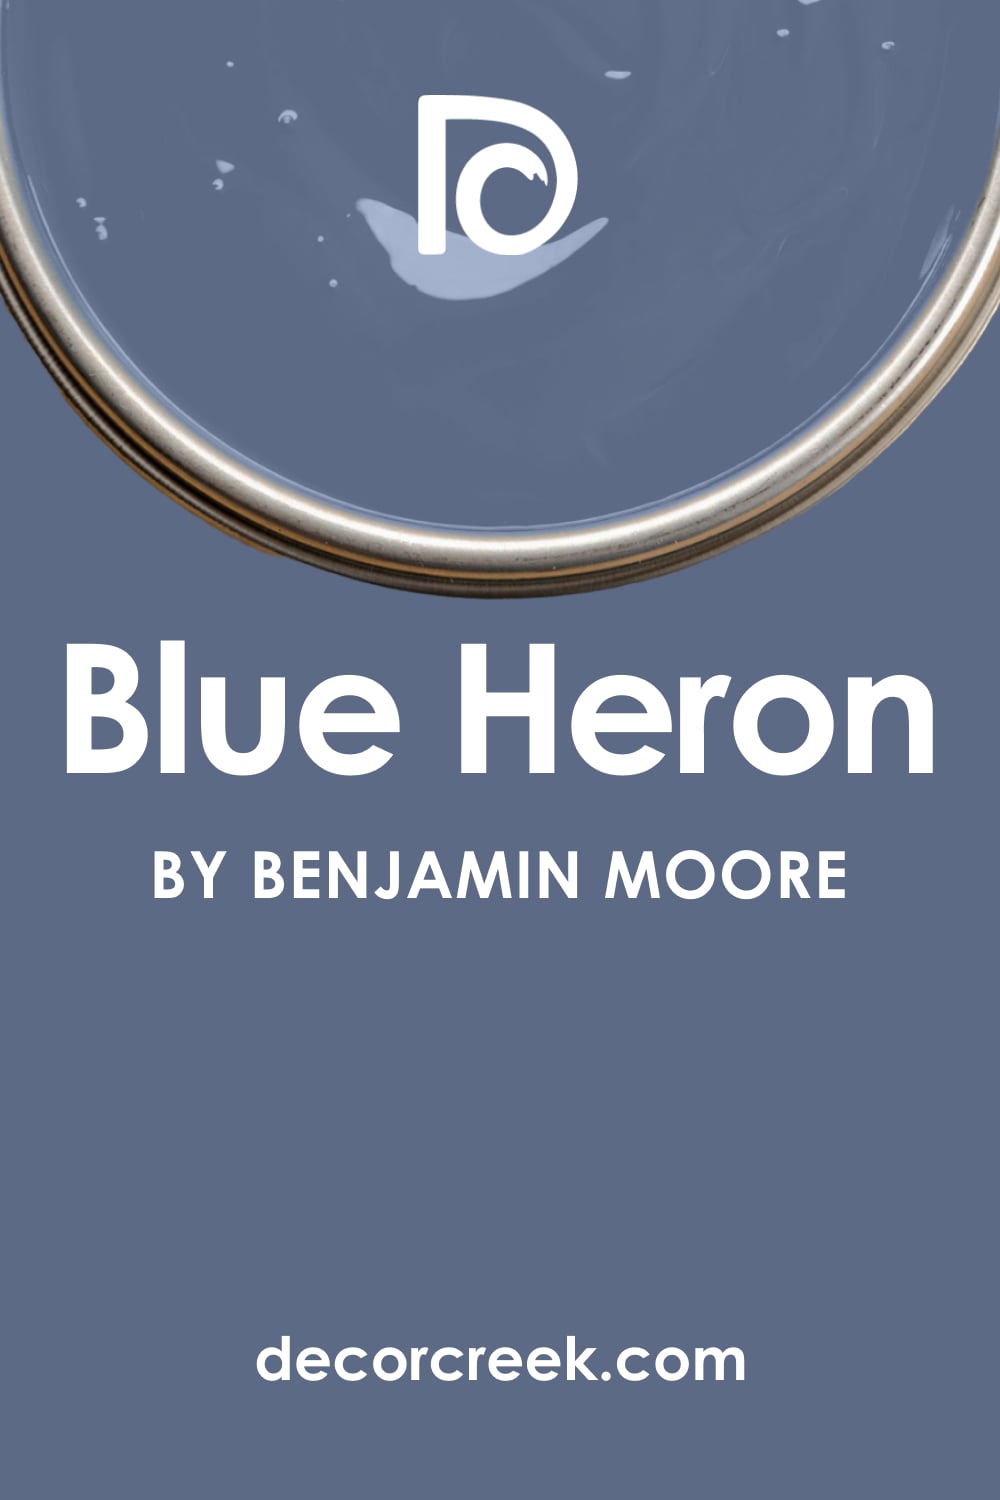 What Kind of Color Is BM Blue Heron?